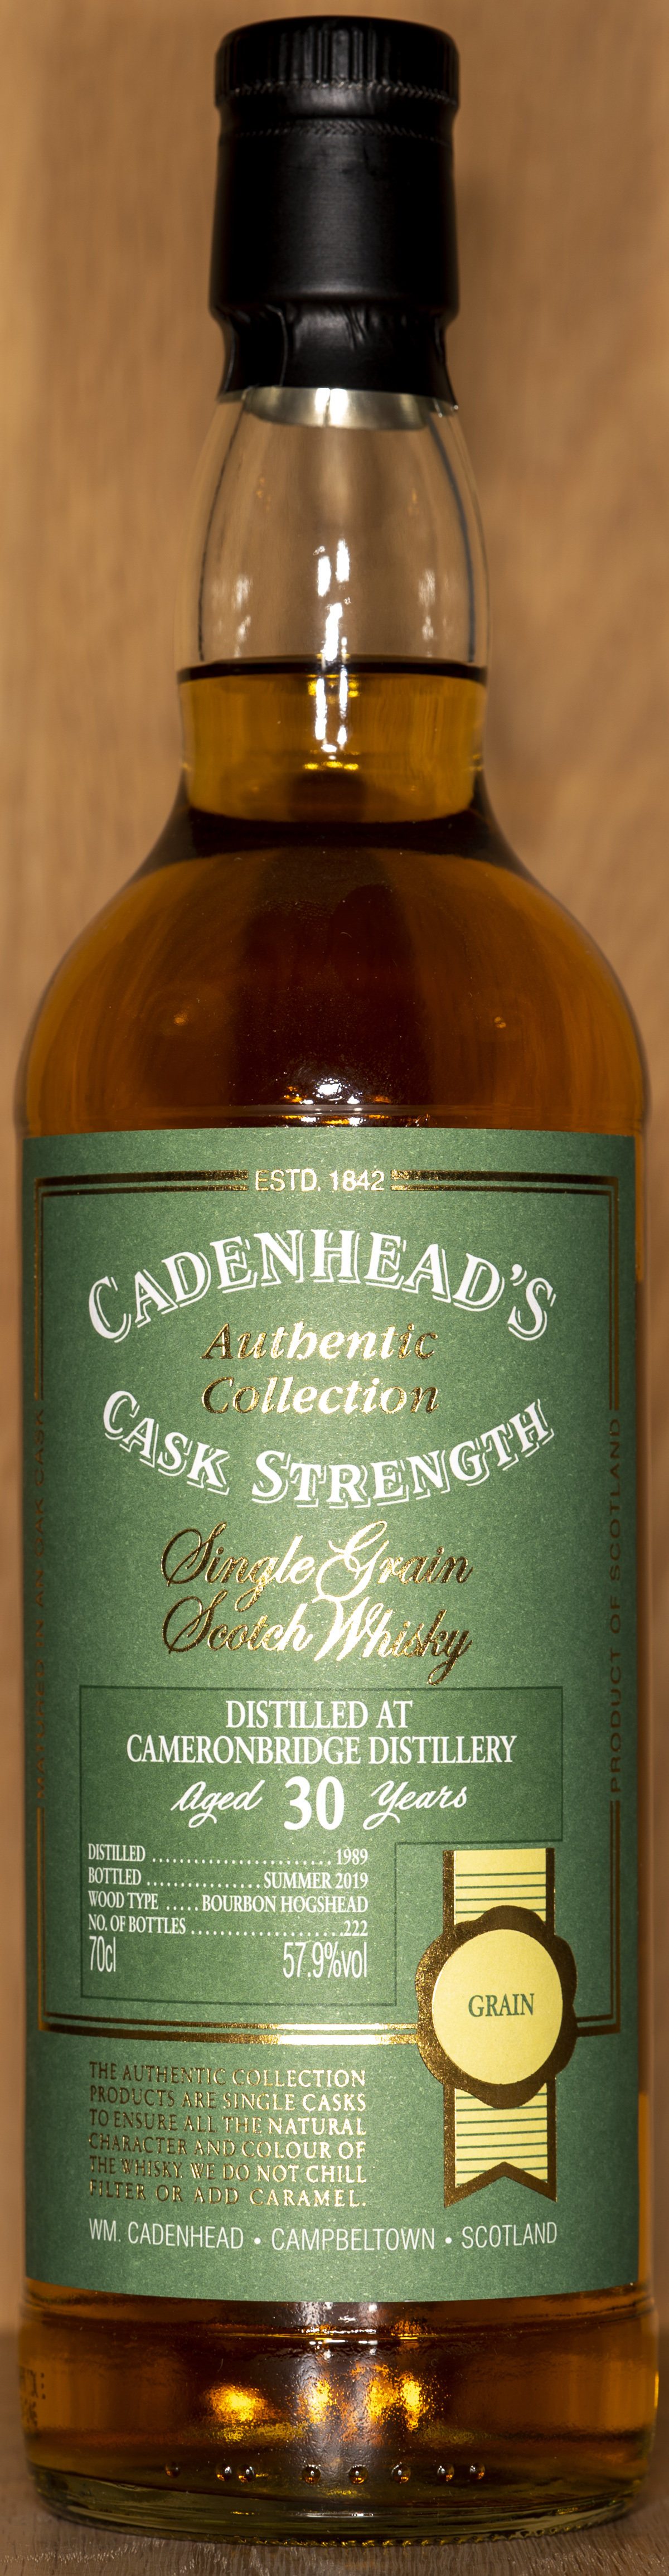 Billede: DSC_5031 - Cadenheads Authentic Collection Cameronbridge 30 - bottle front.jpg